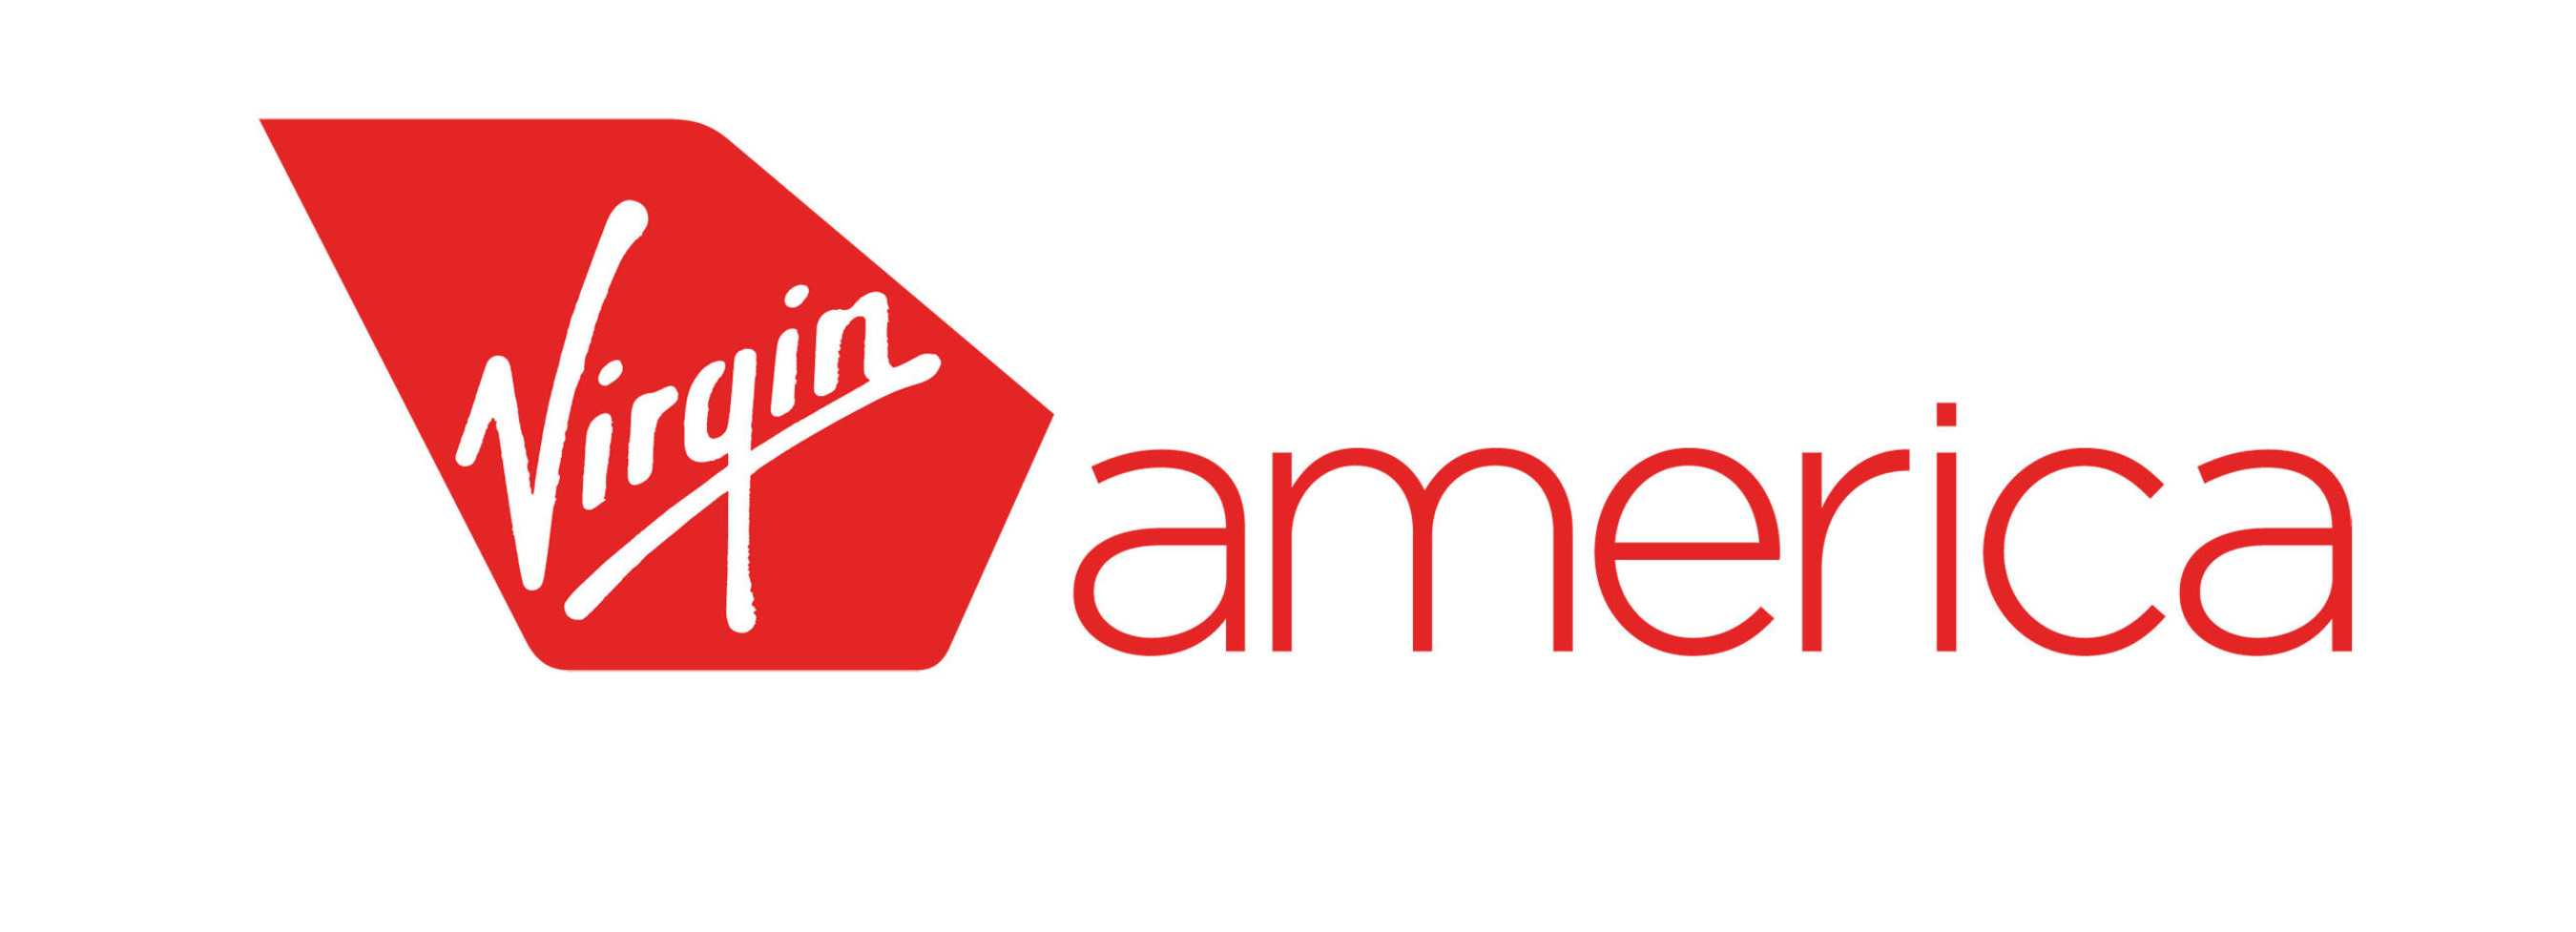 Virgin America logo. (PRNewsFoto/Virgin America)